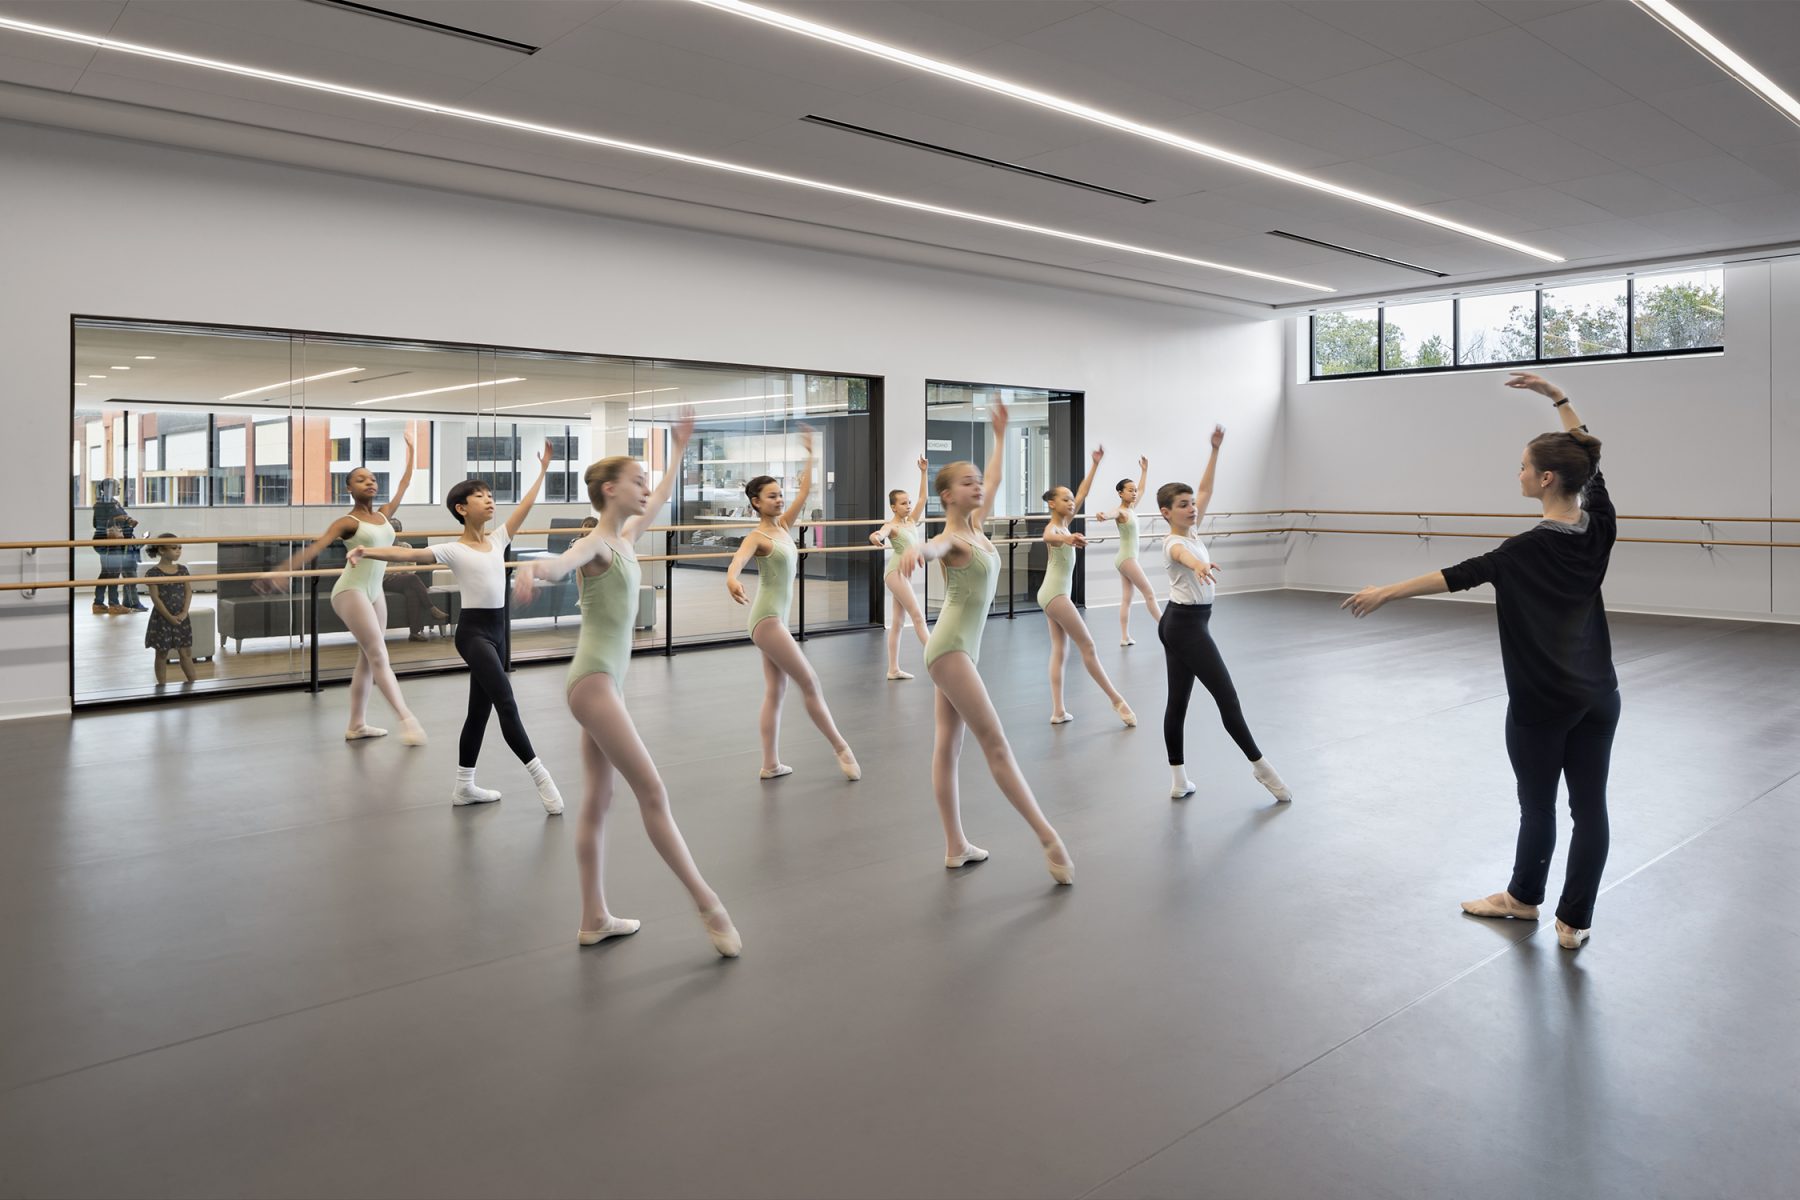 Boston Ballet School Interior Image of Students